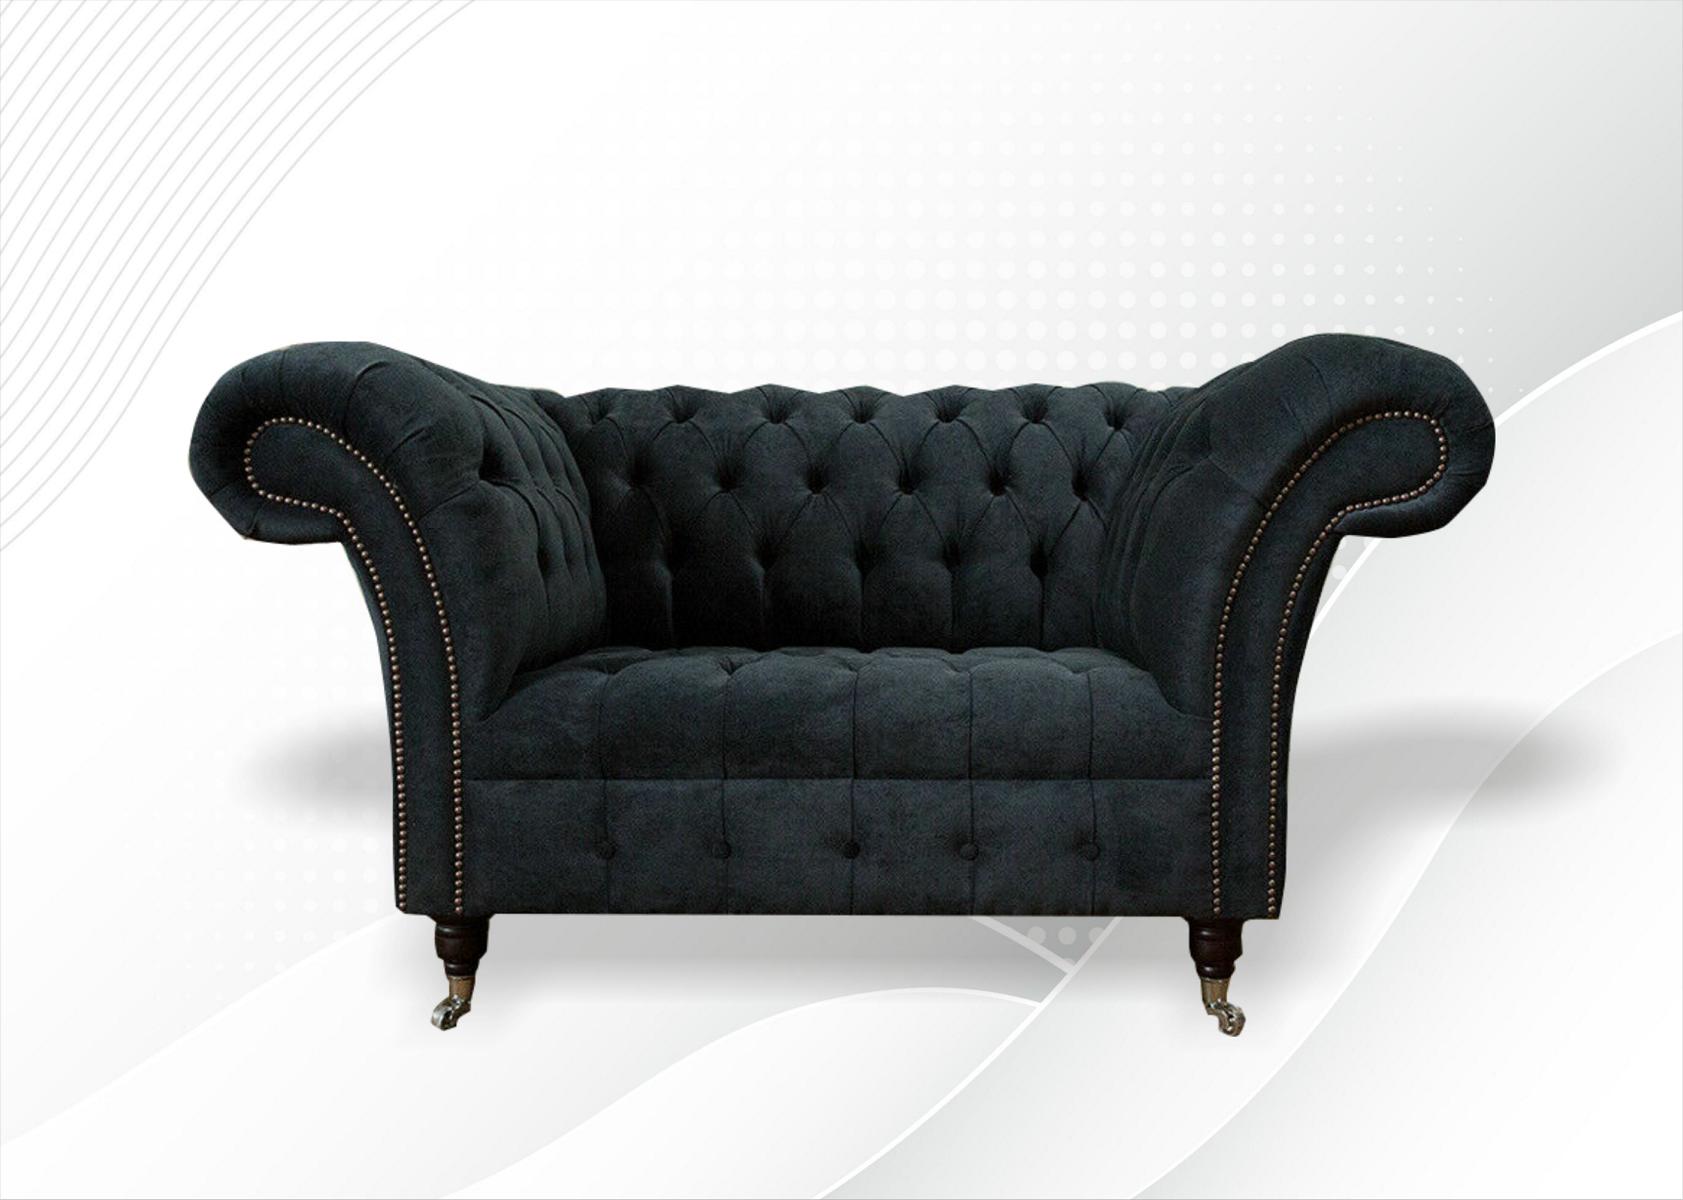 Textil Chesterfield 1 Sitzer Couch Polster Sitz Stoff Leder Couchen Sofas Sofa